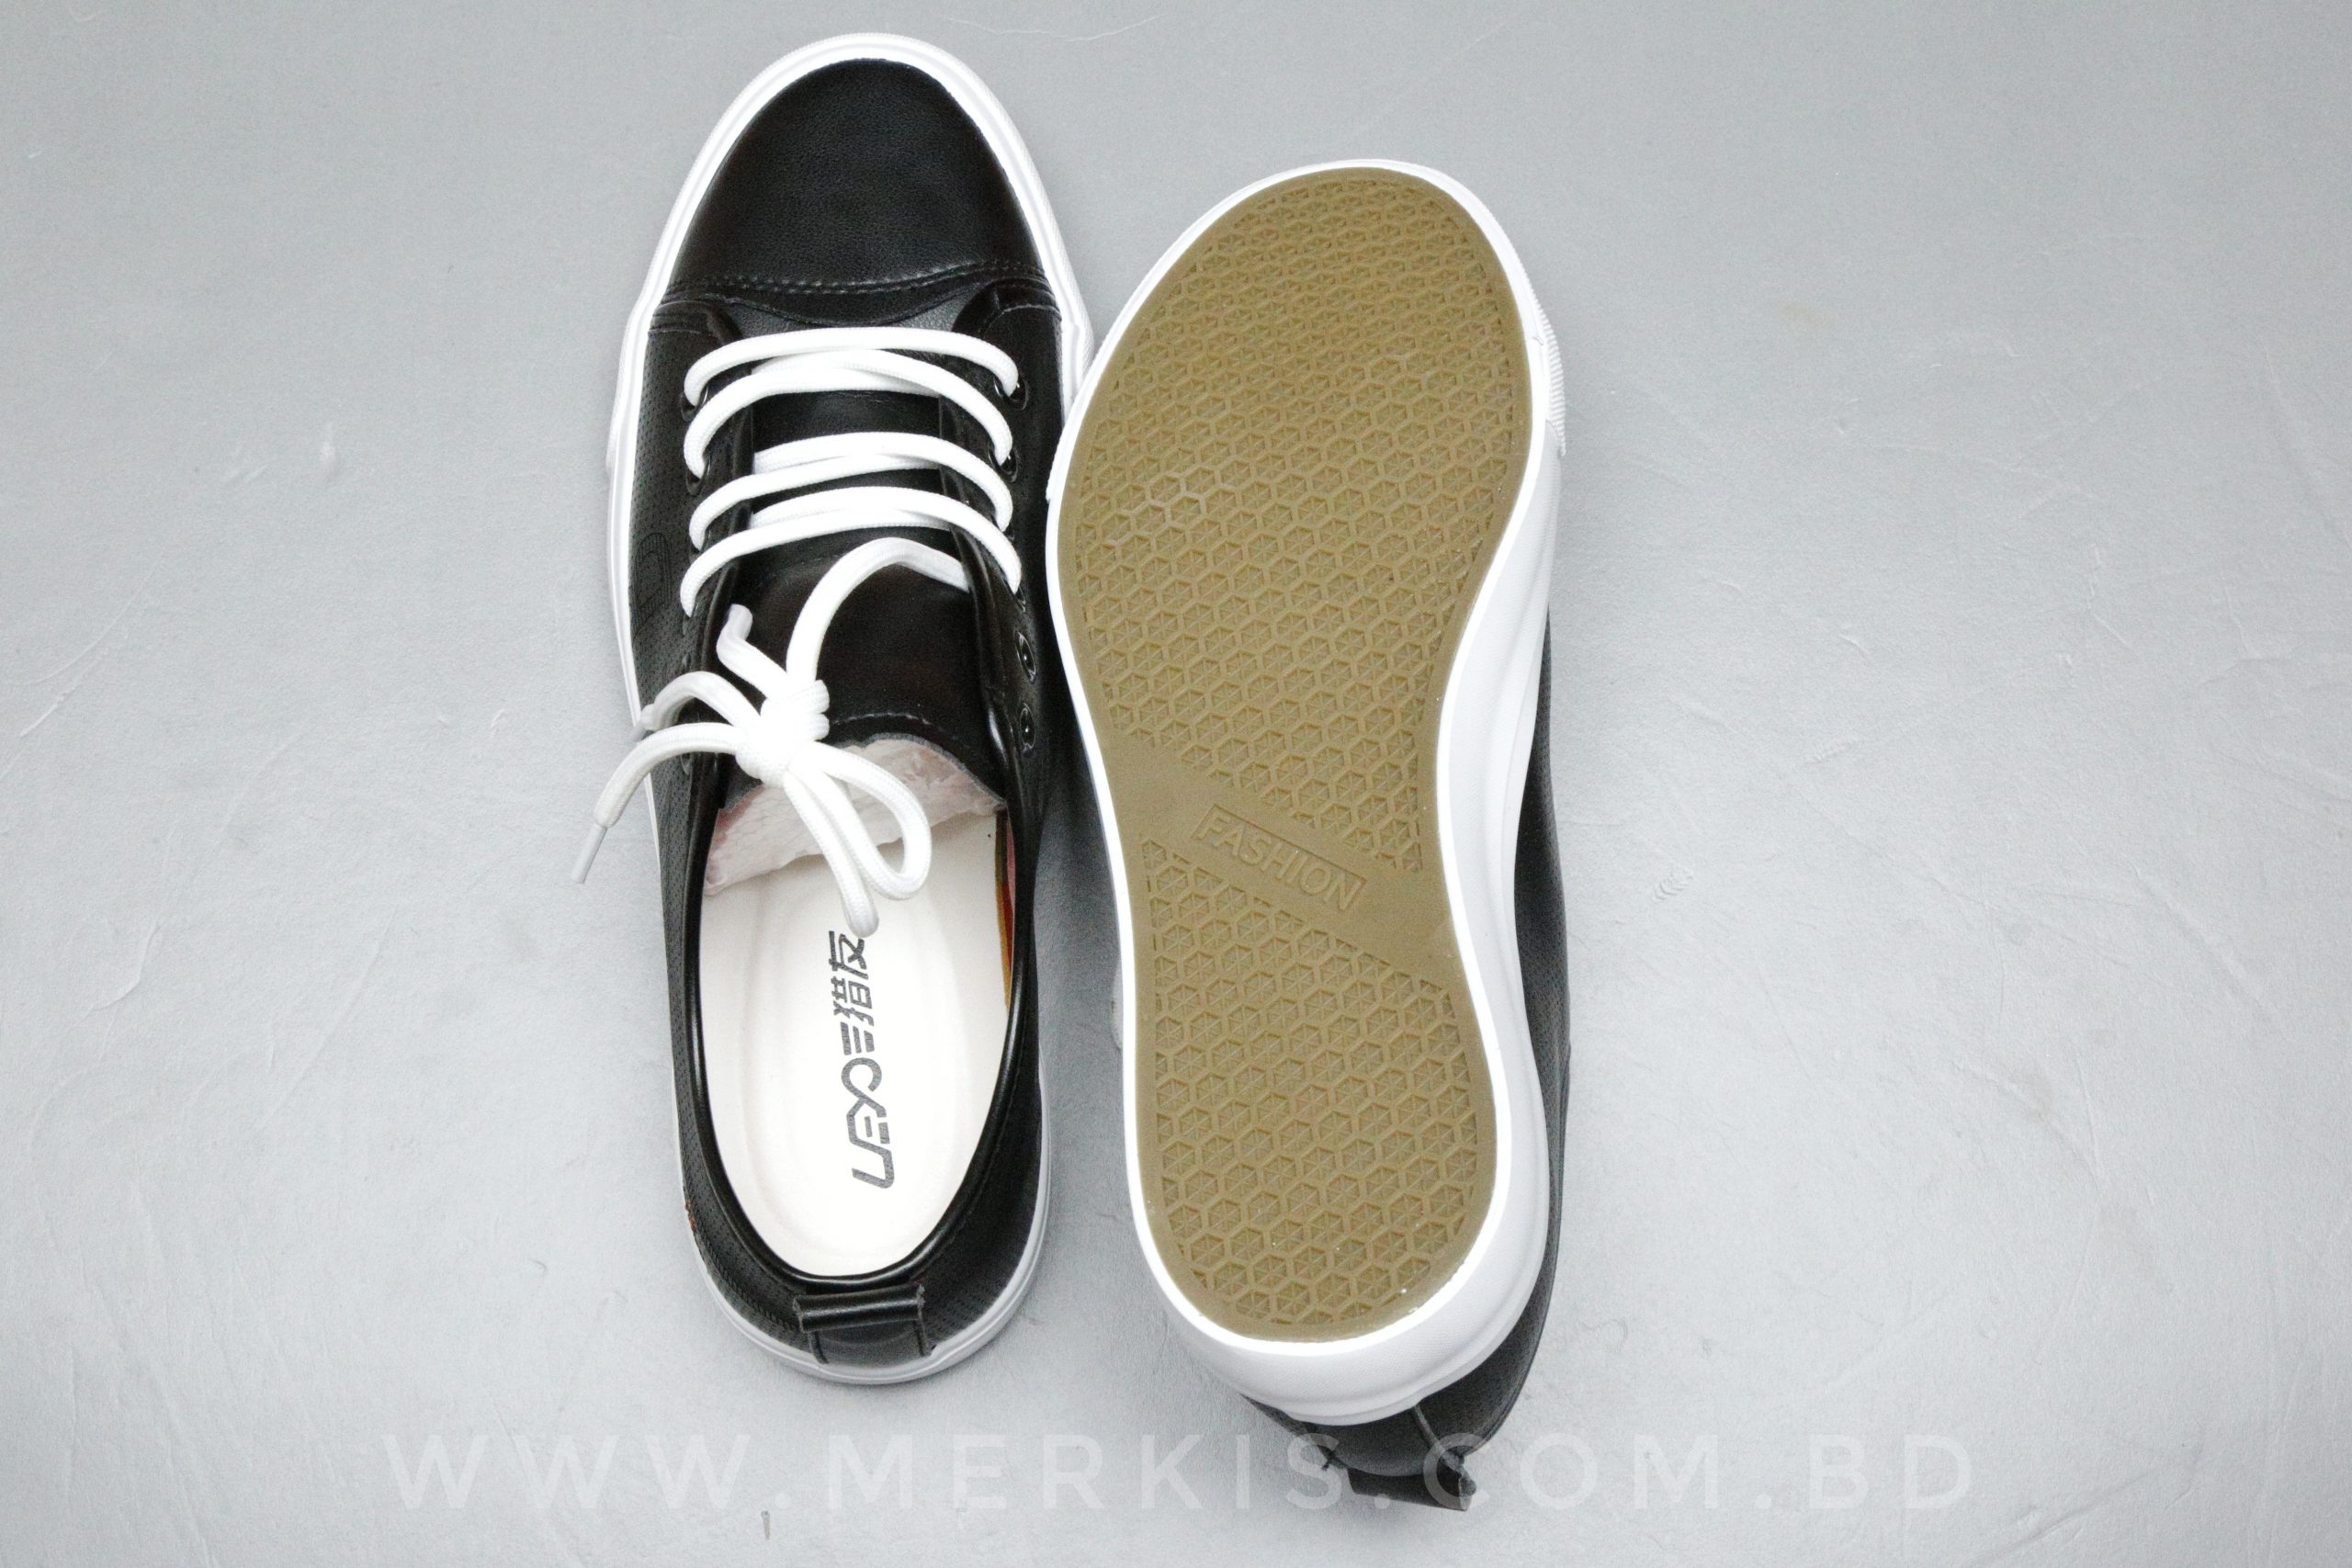 black sneaker for men bd at best price range on online shop merkisbd